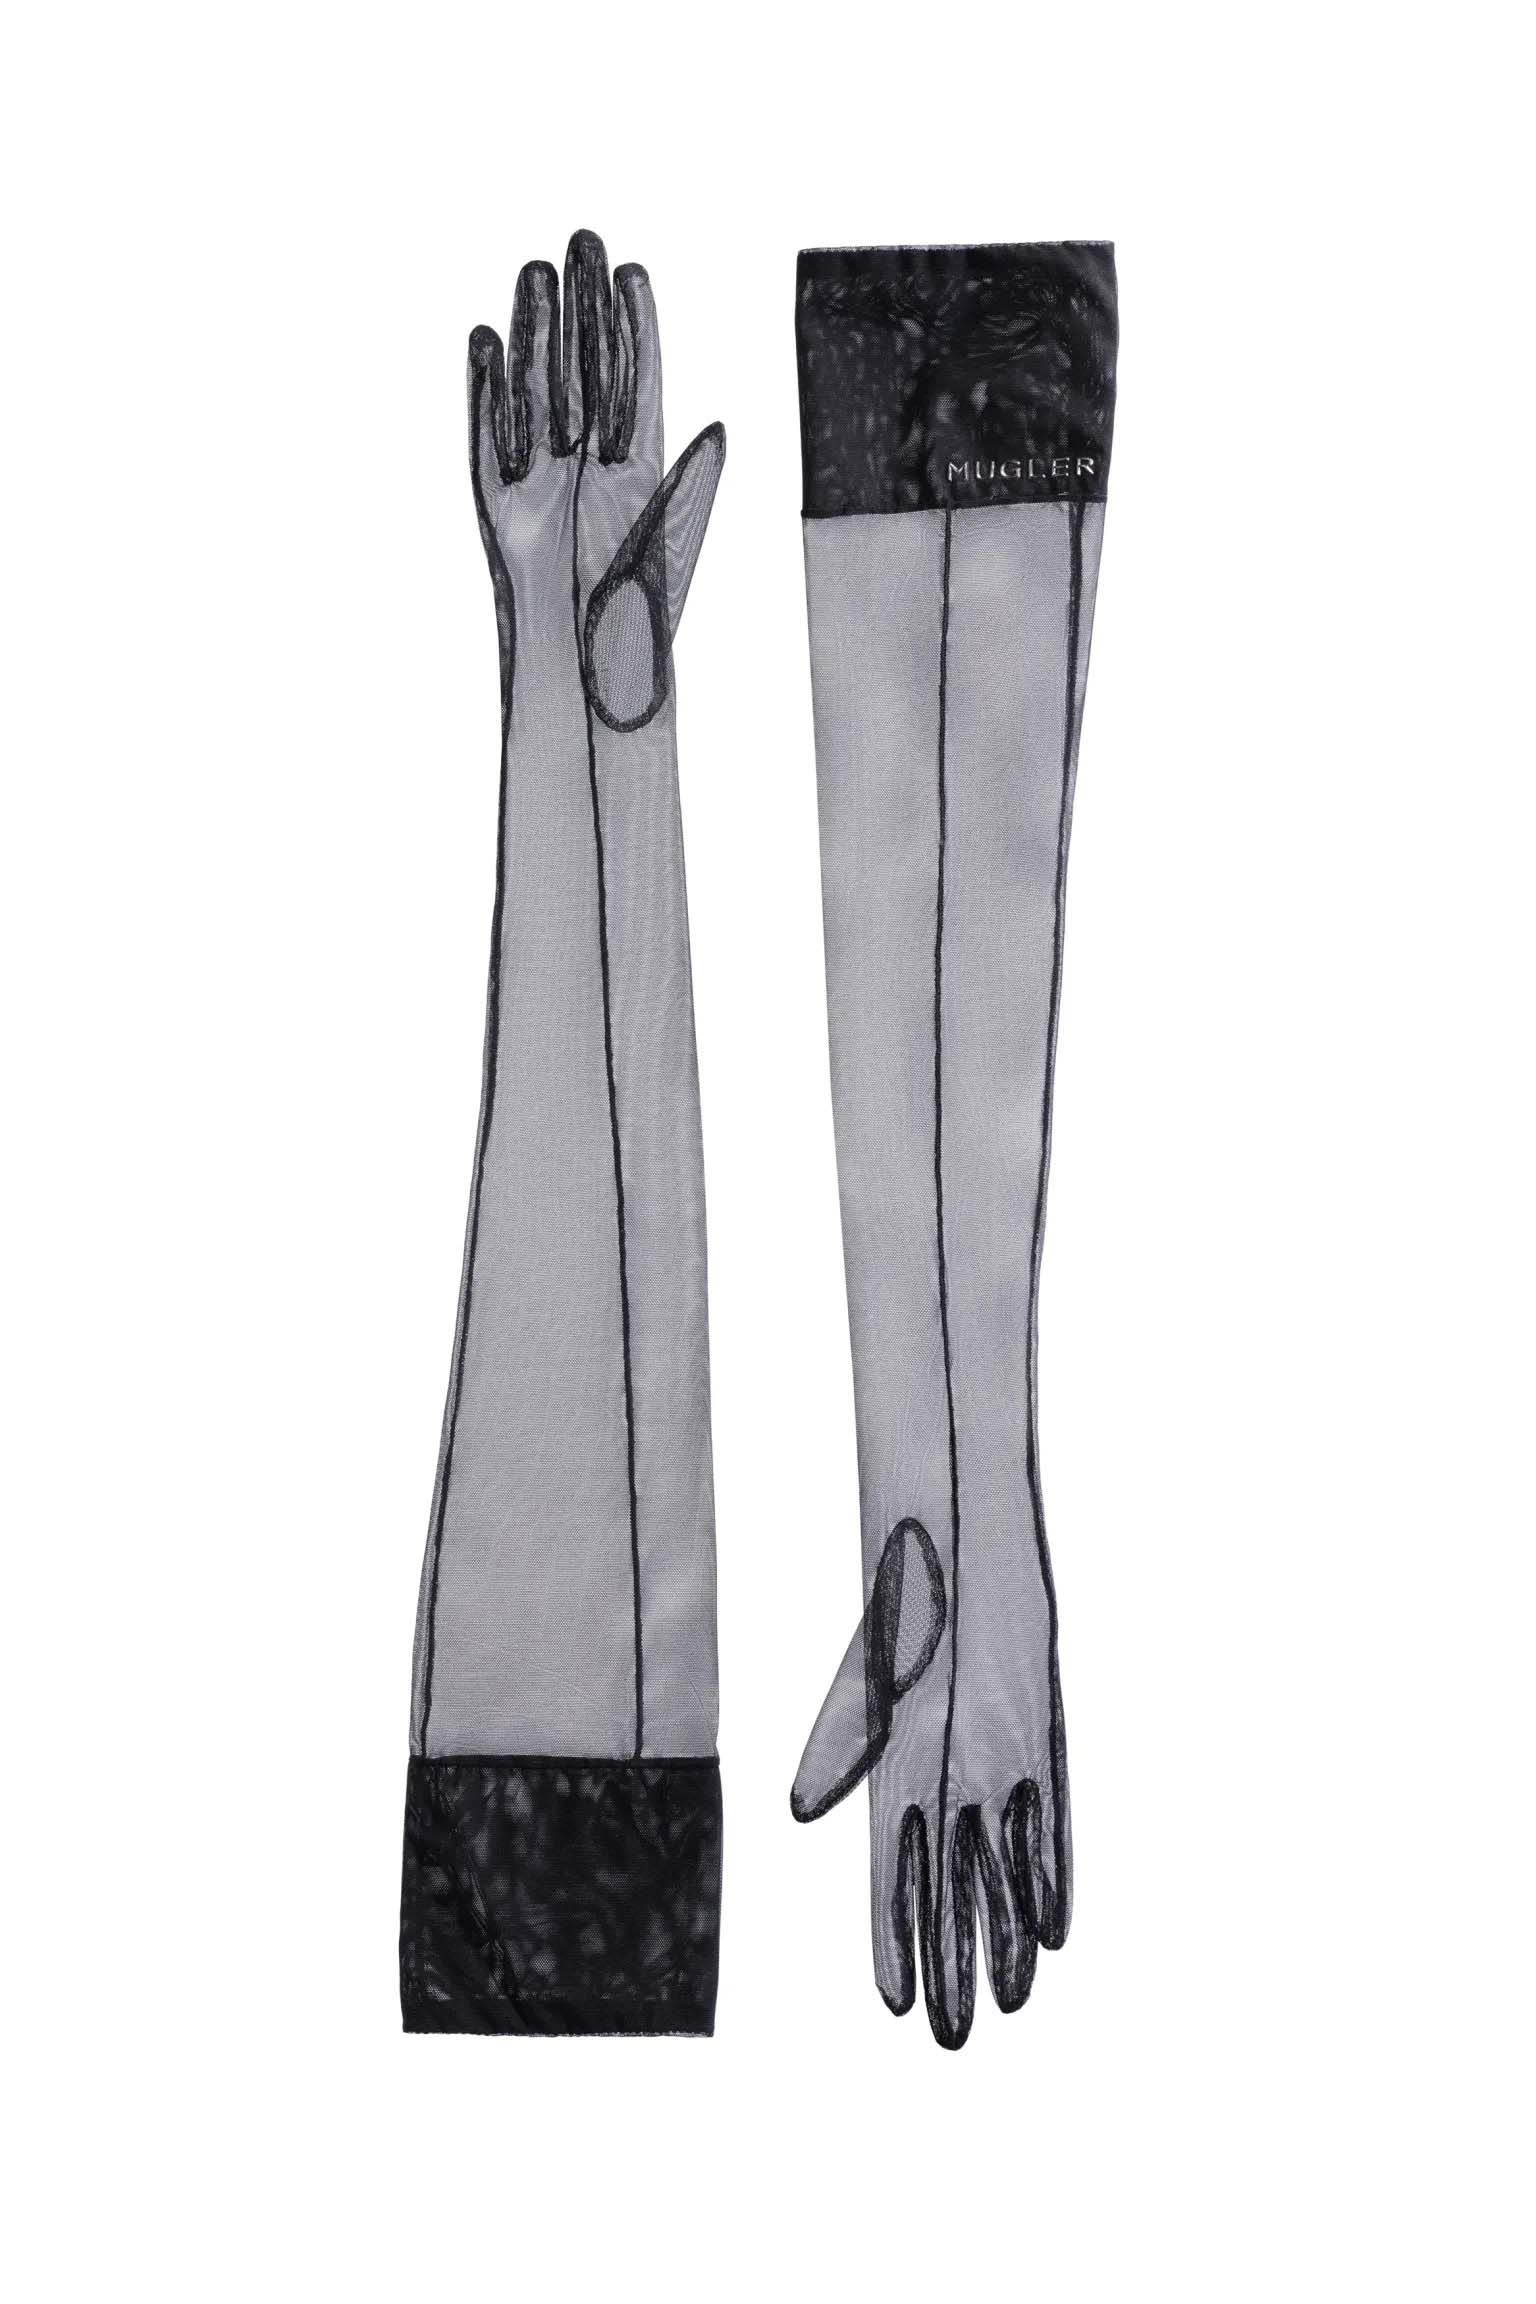 Mugler H&M Second-Skin Gloves Black in Polyamide/Spandex with